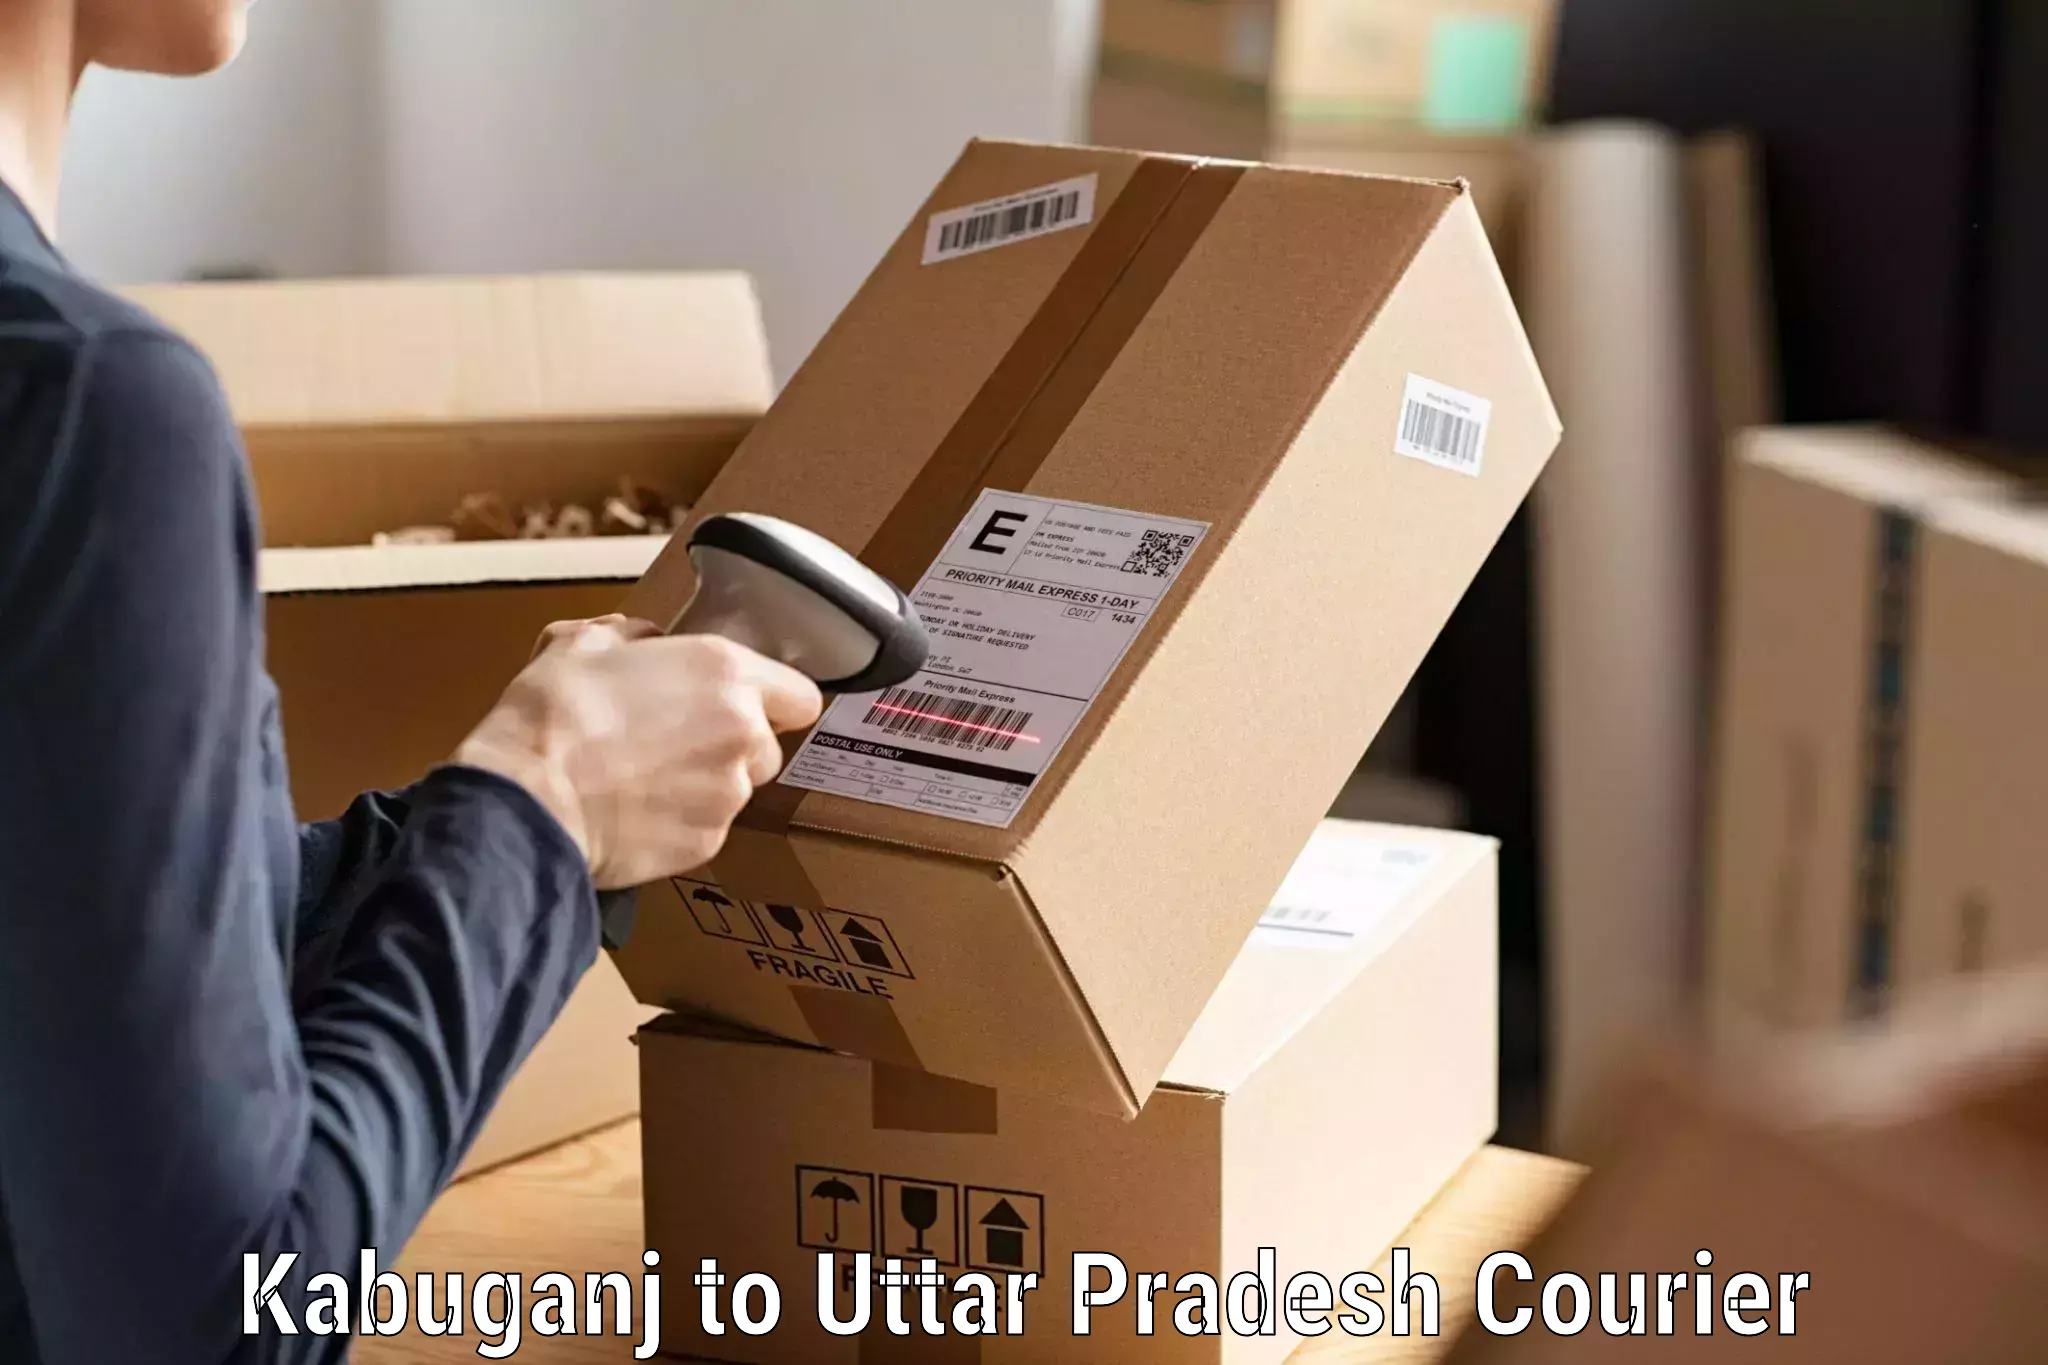 Courier service comparison Kabuganj to Uttar Pradesh